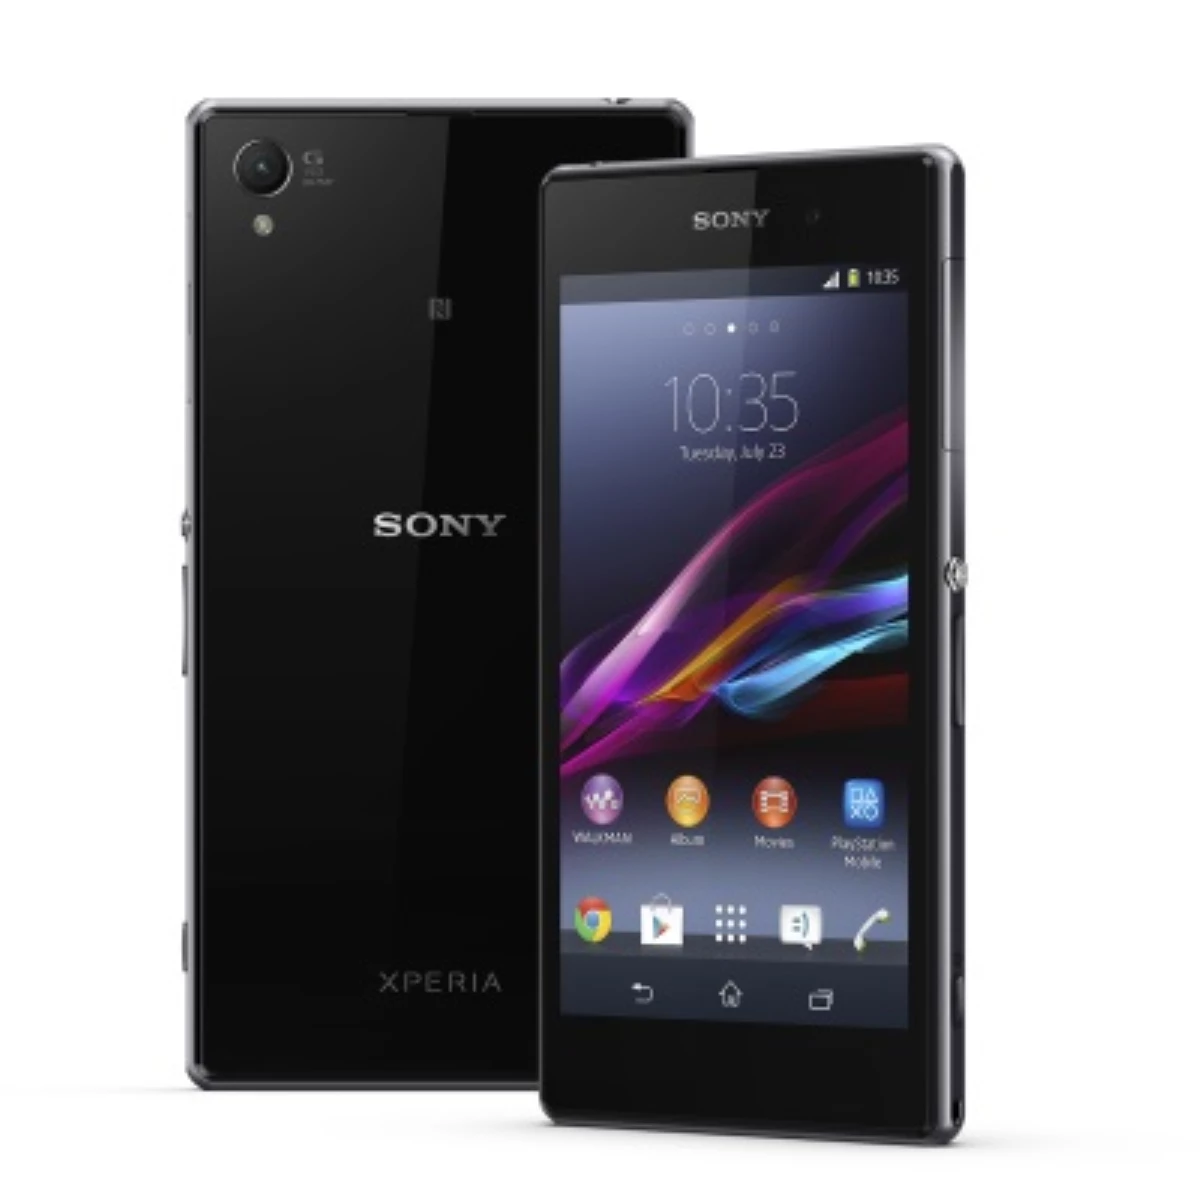 Sony\'nin En İyisi XperiaTM Z1 Turkcellmagaza.com\'da ön Satışta